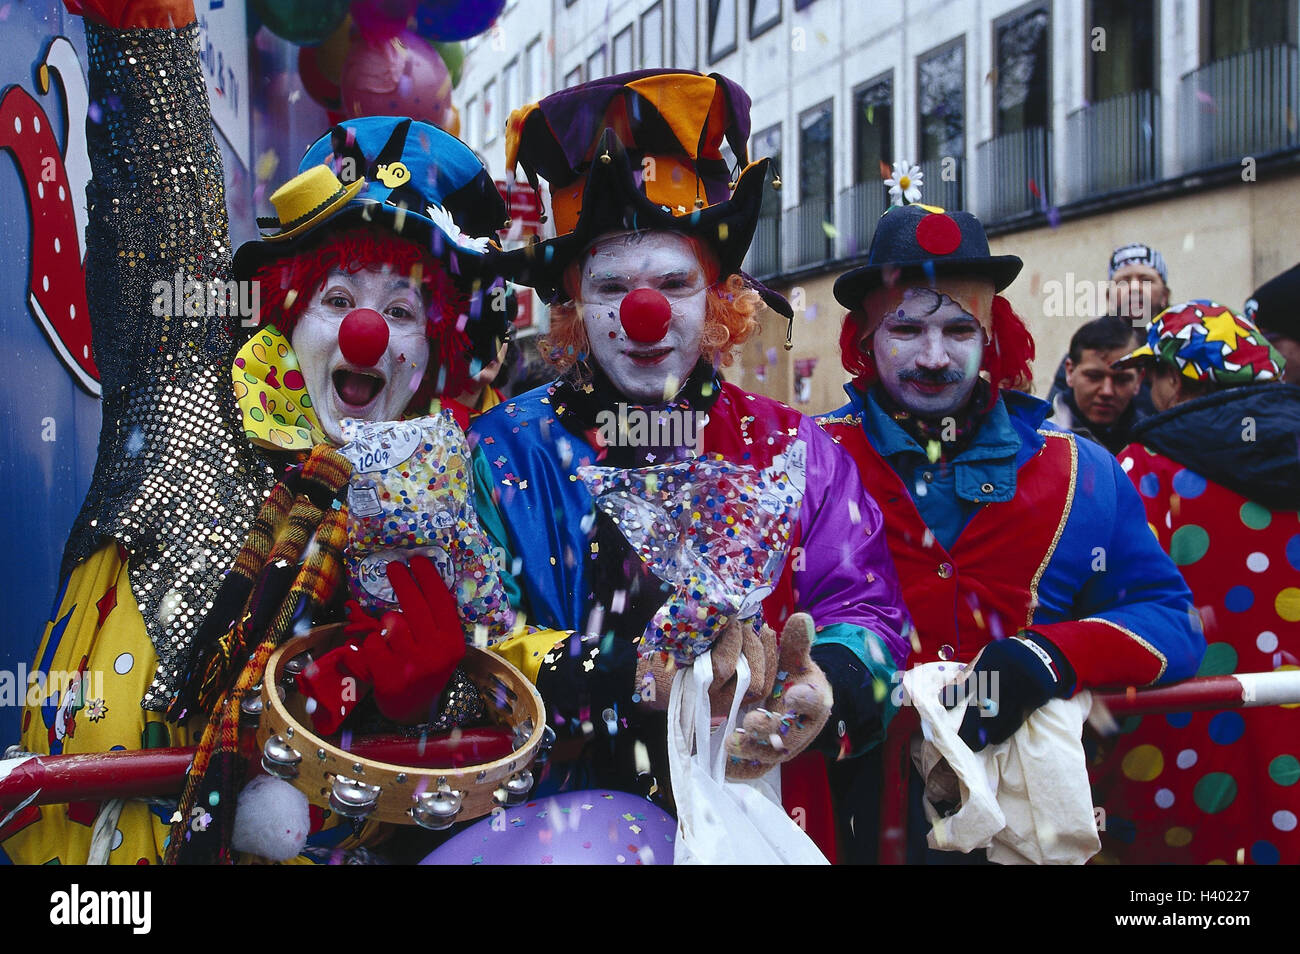 Deutschland, Köln, Karneval, Clowns, drei, Geste, halbe Porträt, Karneval, Männer, Frau, Futter, Verkleidungen, Kostüme, verkleidet, Schminke, geschminkt, glücklich, Lächeln, machen Musik, Instrumente, Clown Kostüme, Stockfoto